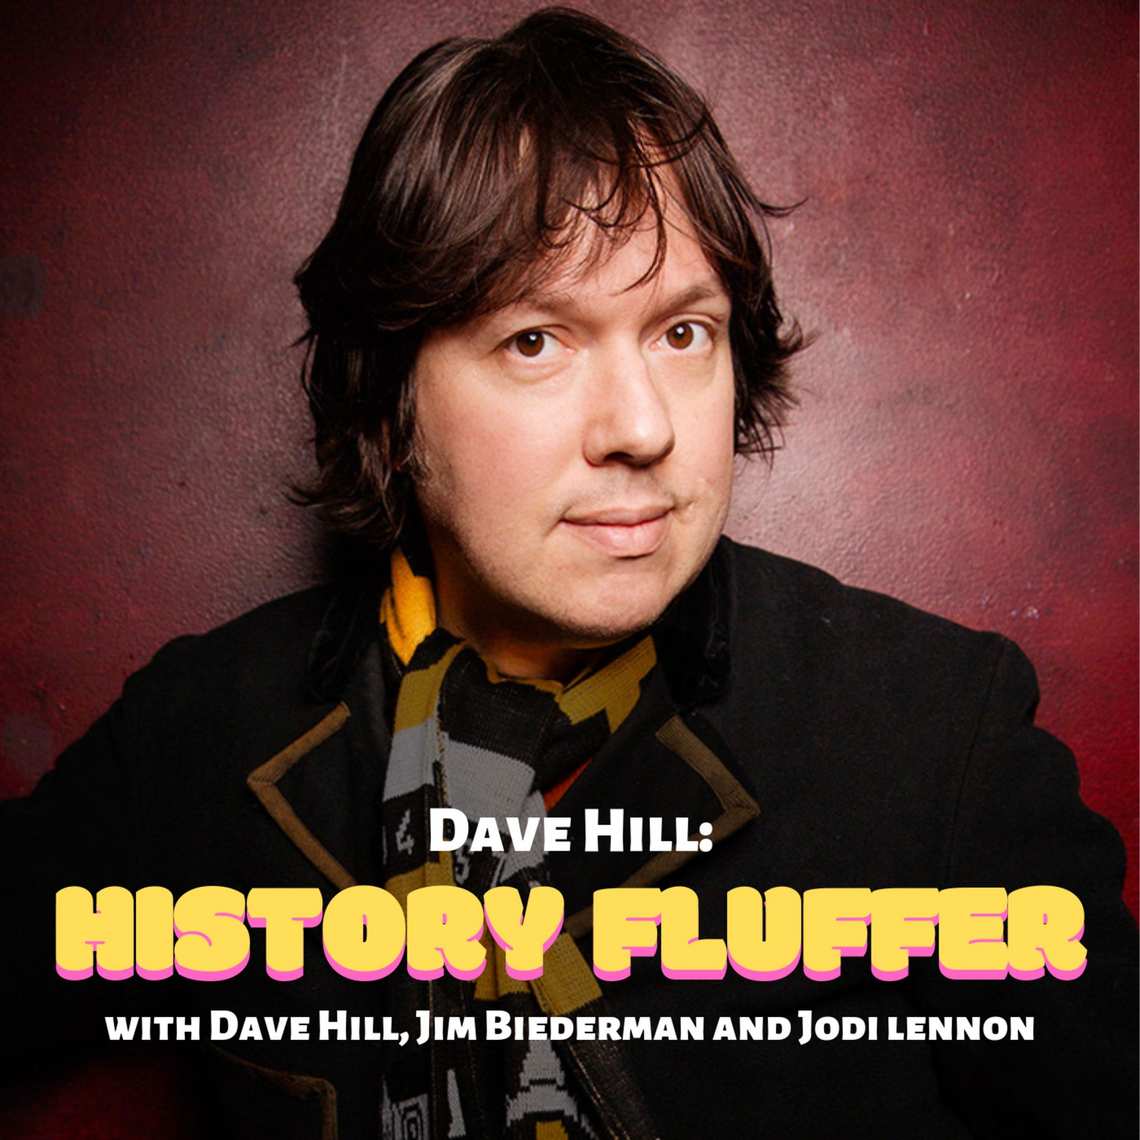 Dave Hill: History Fluffer